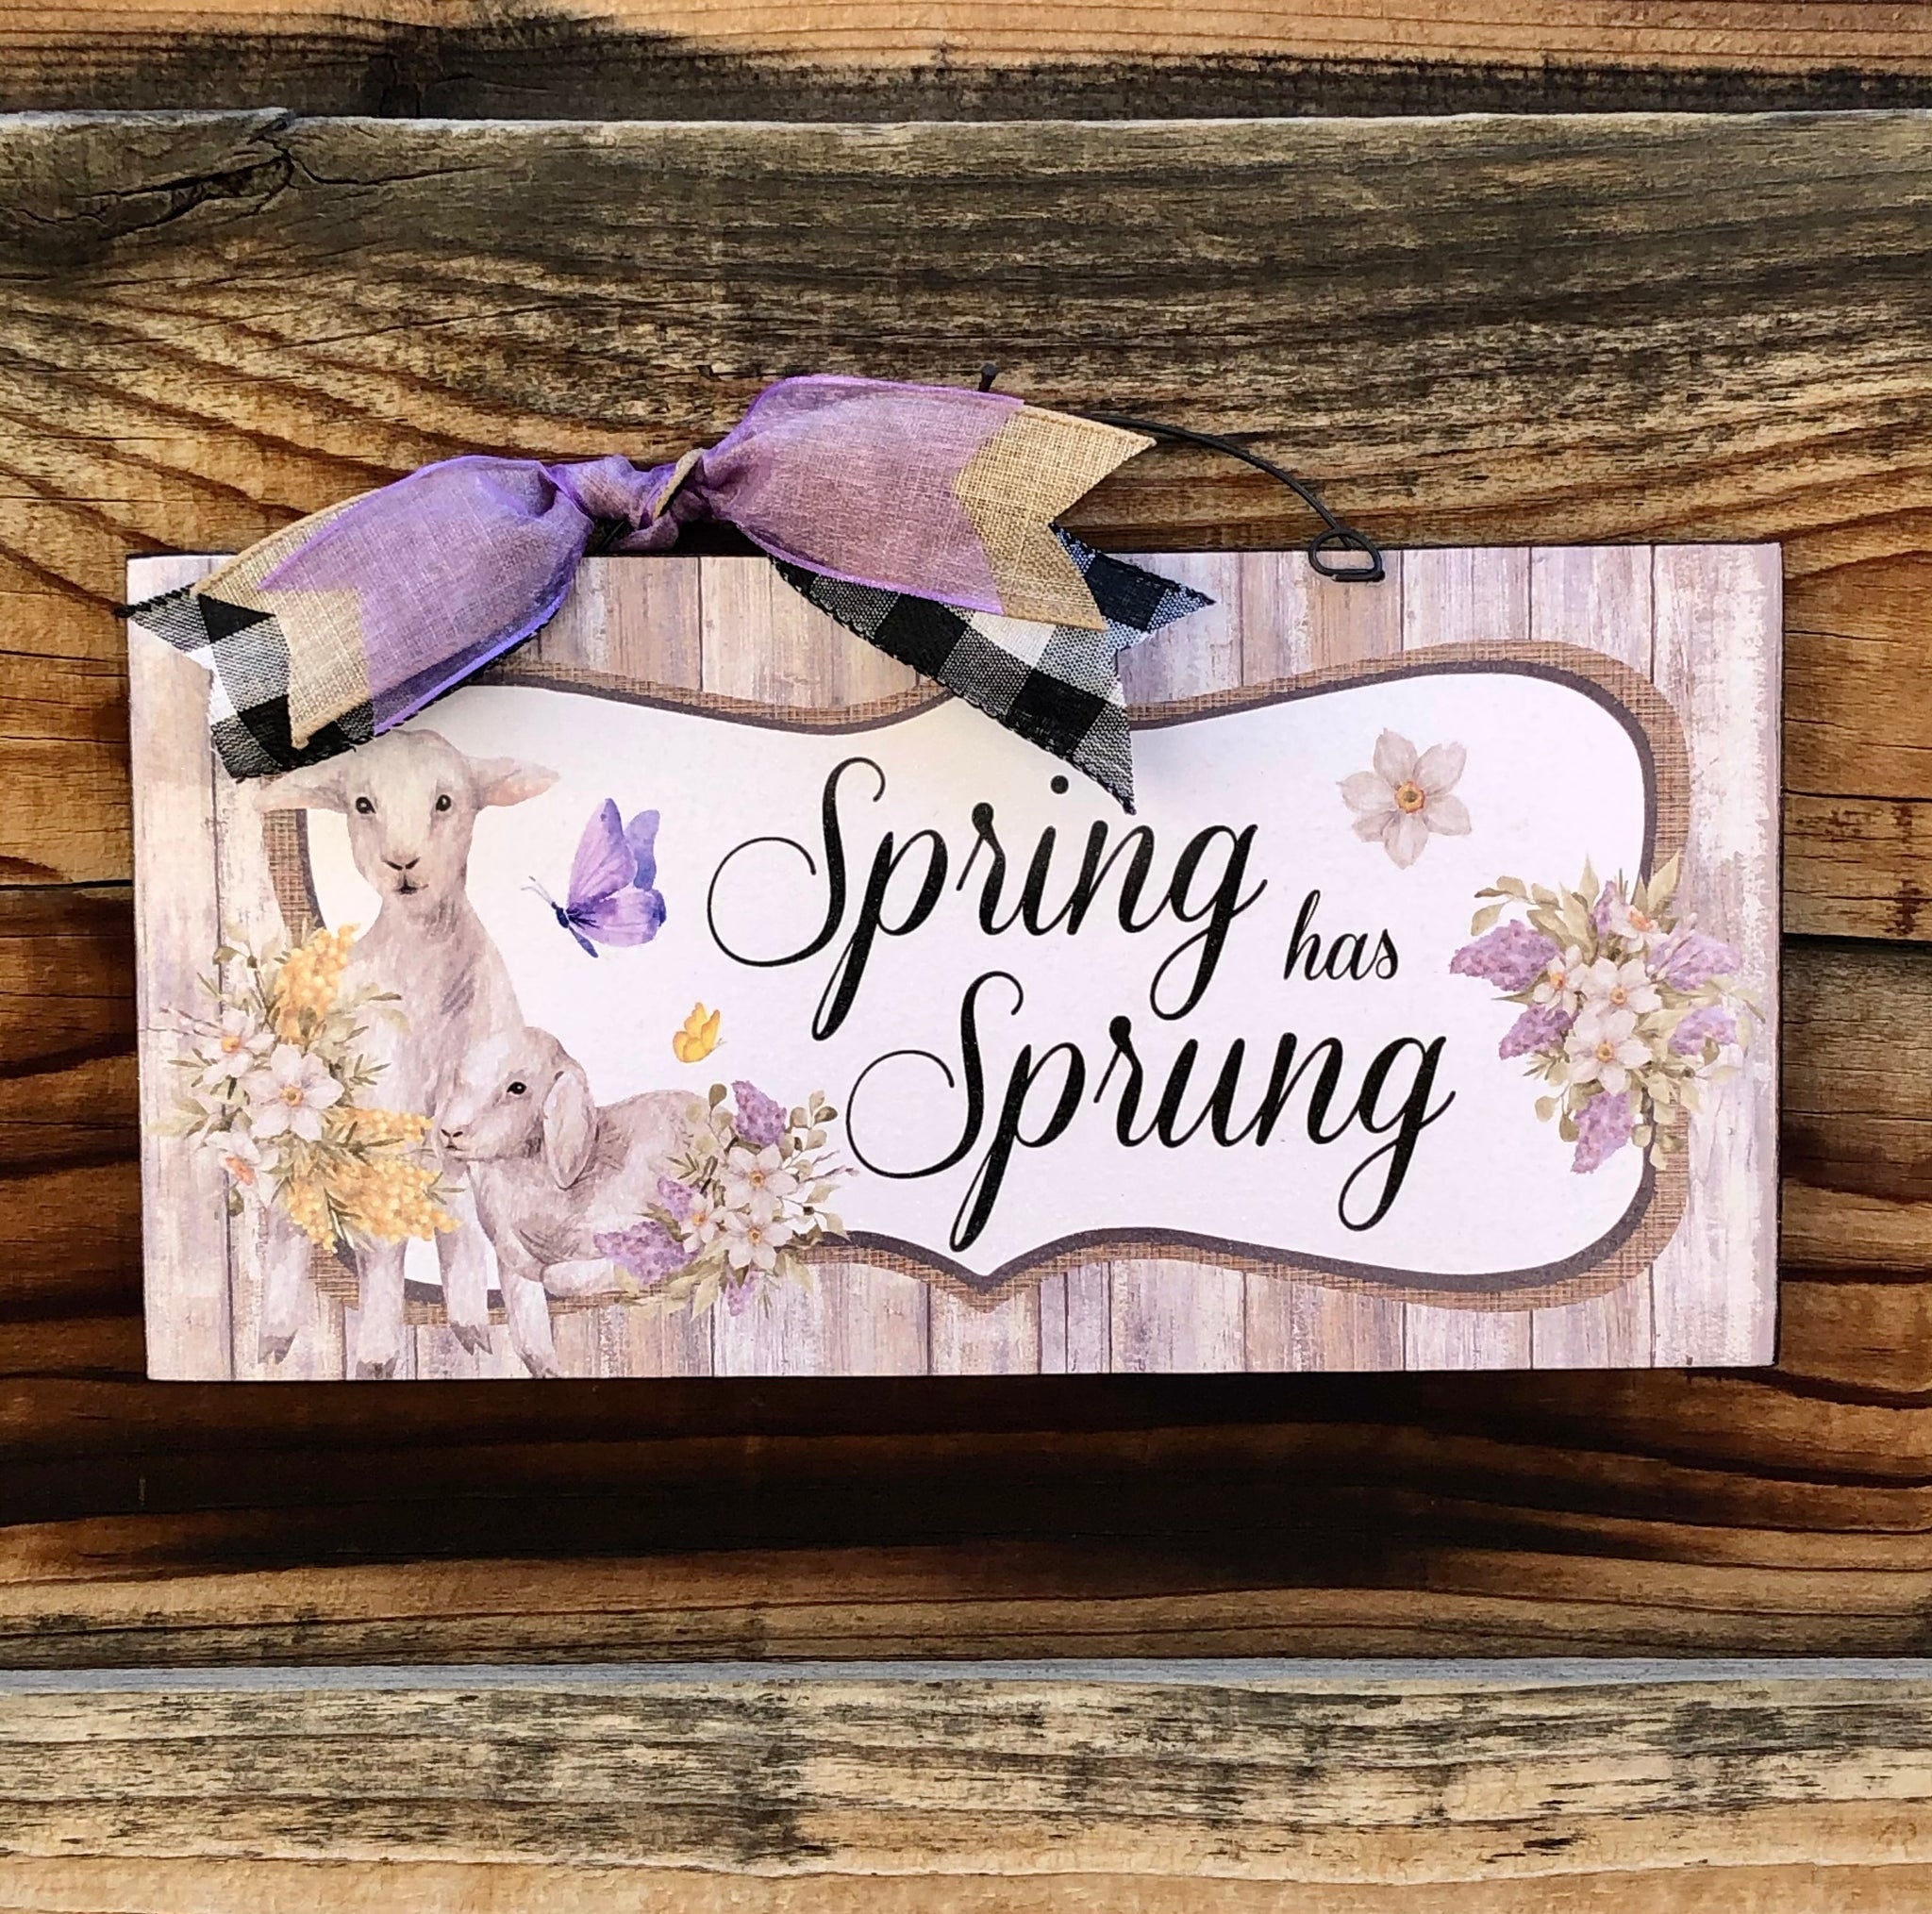 Copy of Spring has Sprung Lamb sign.